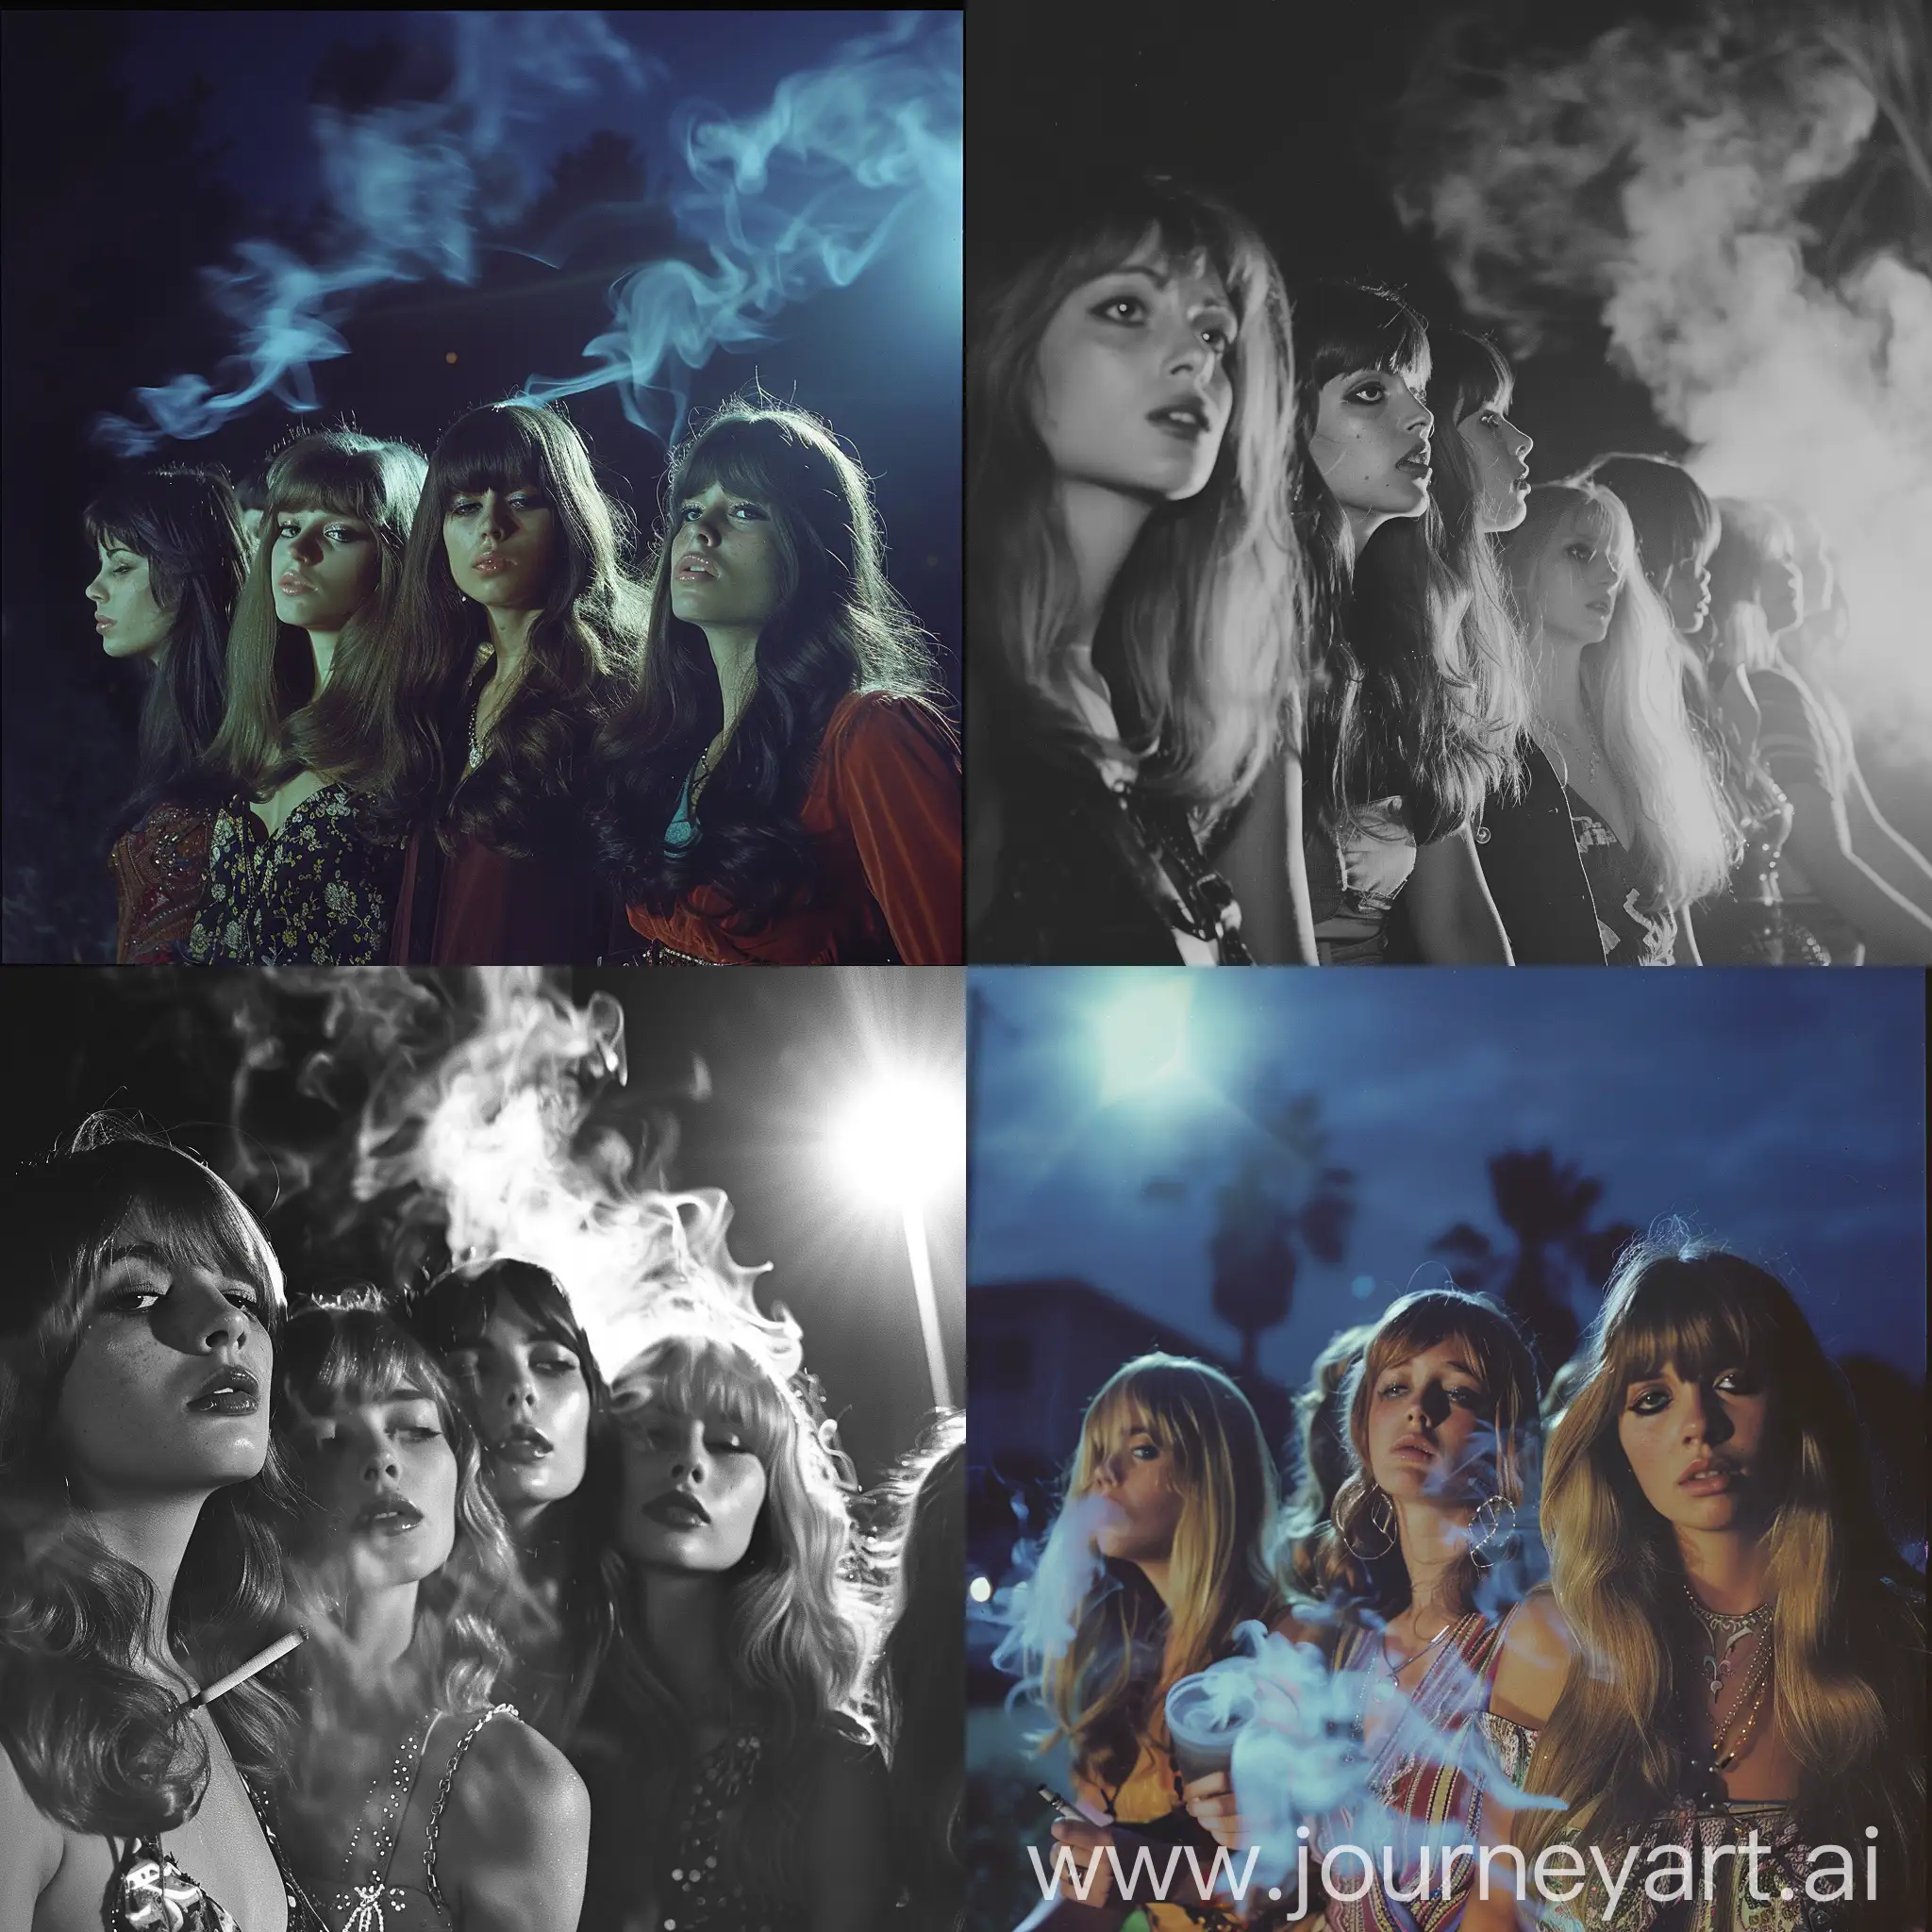 group of women, 1969, retro, bangs, outside, night, smoke, ethereal. dreamy, rockstar, 